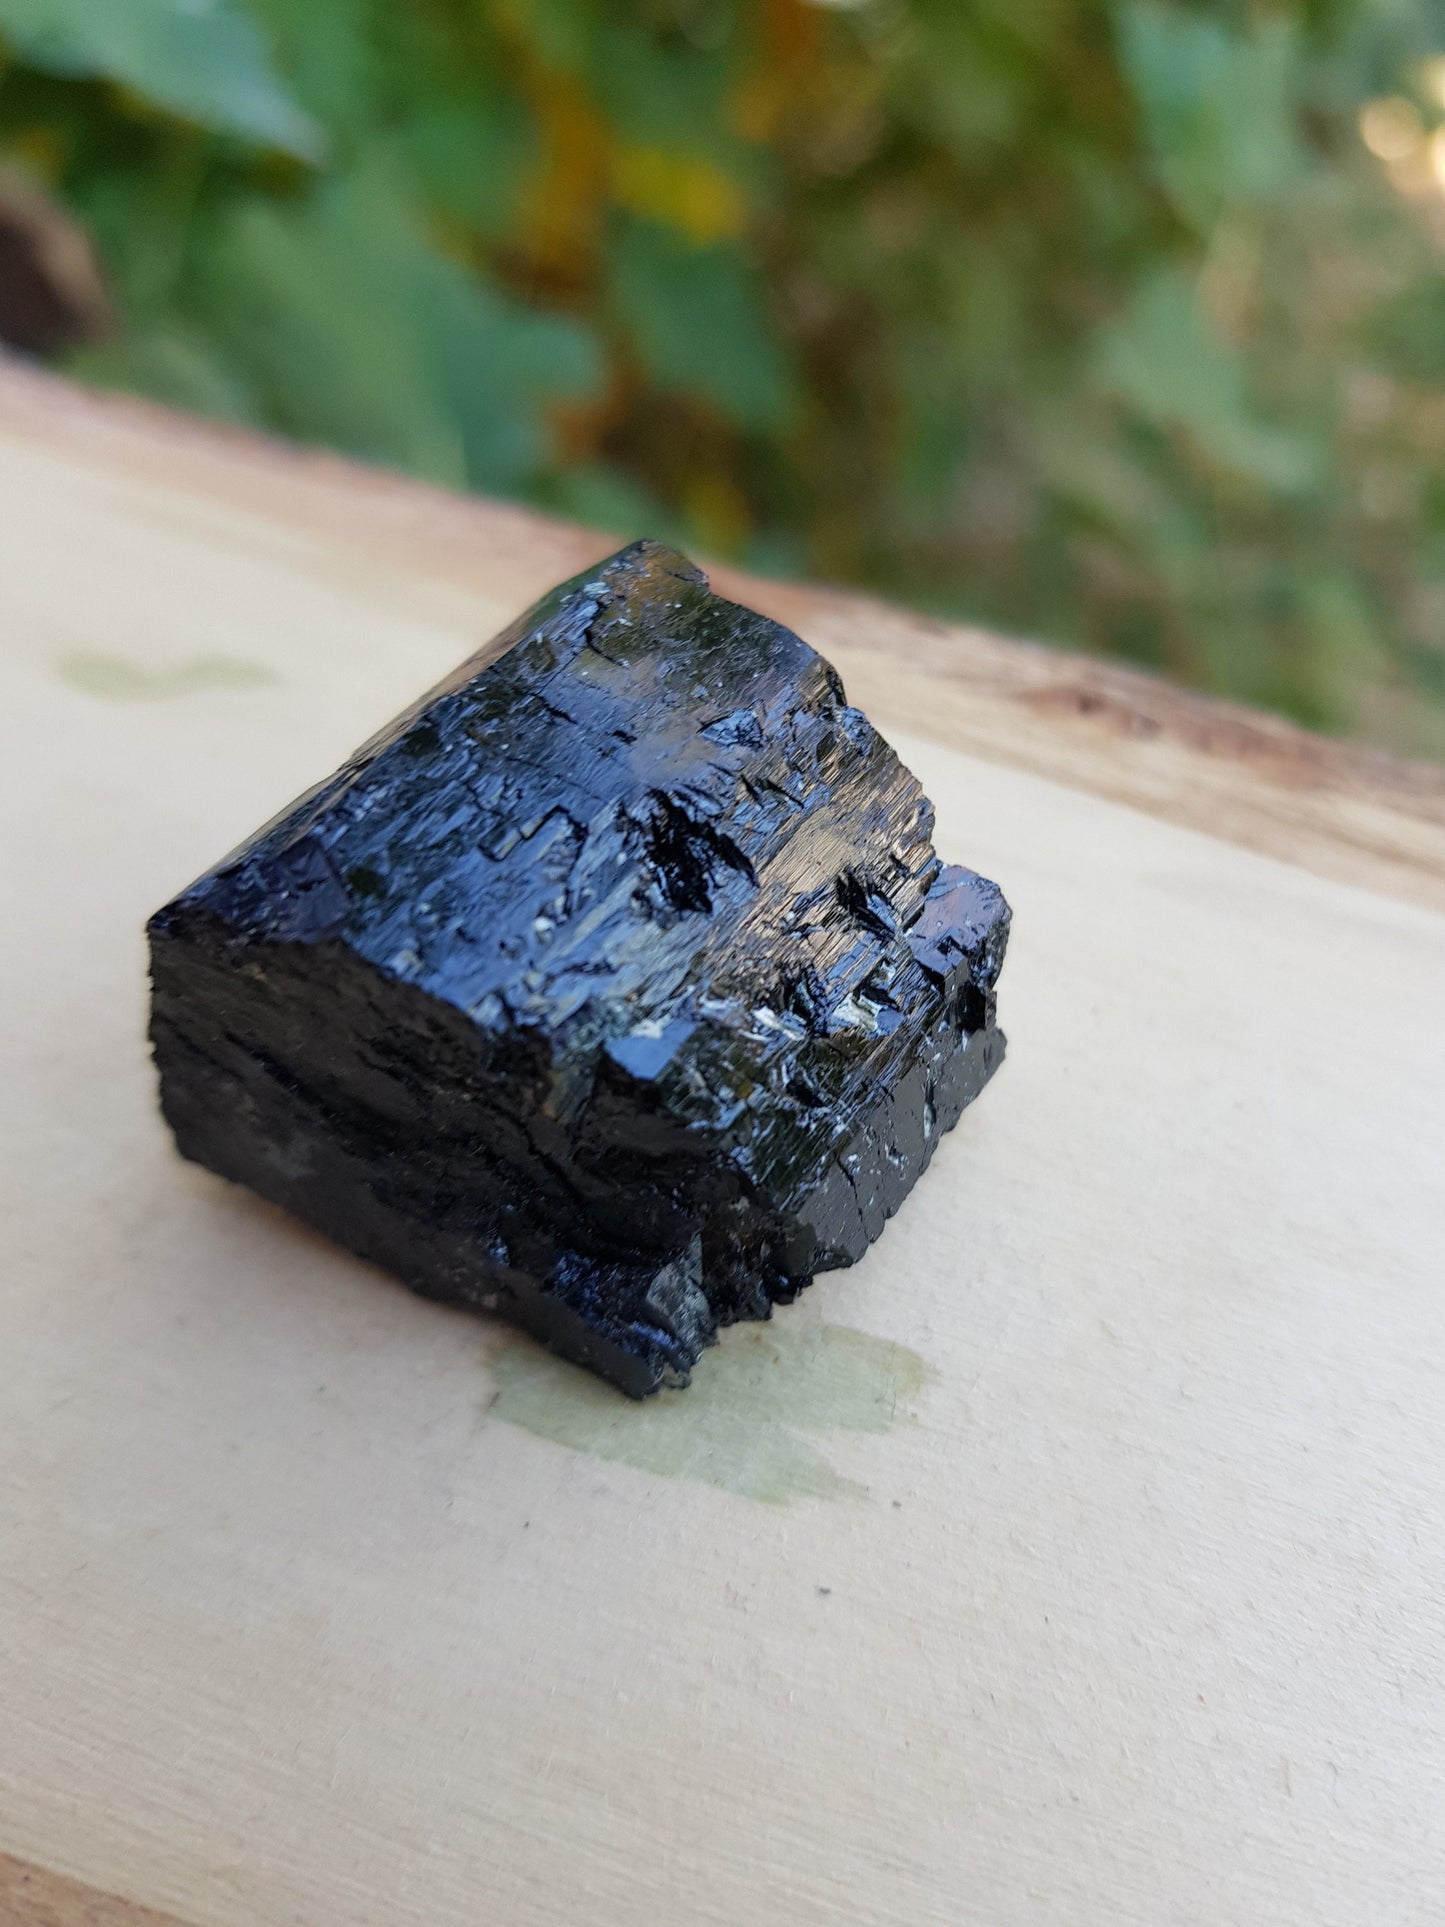 Black Tourmaline Schorl Crystal Specimens, Mineral Specimen